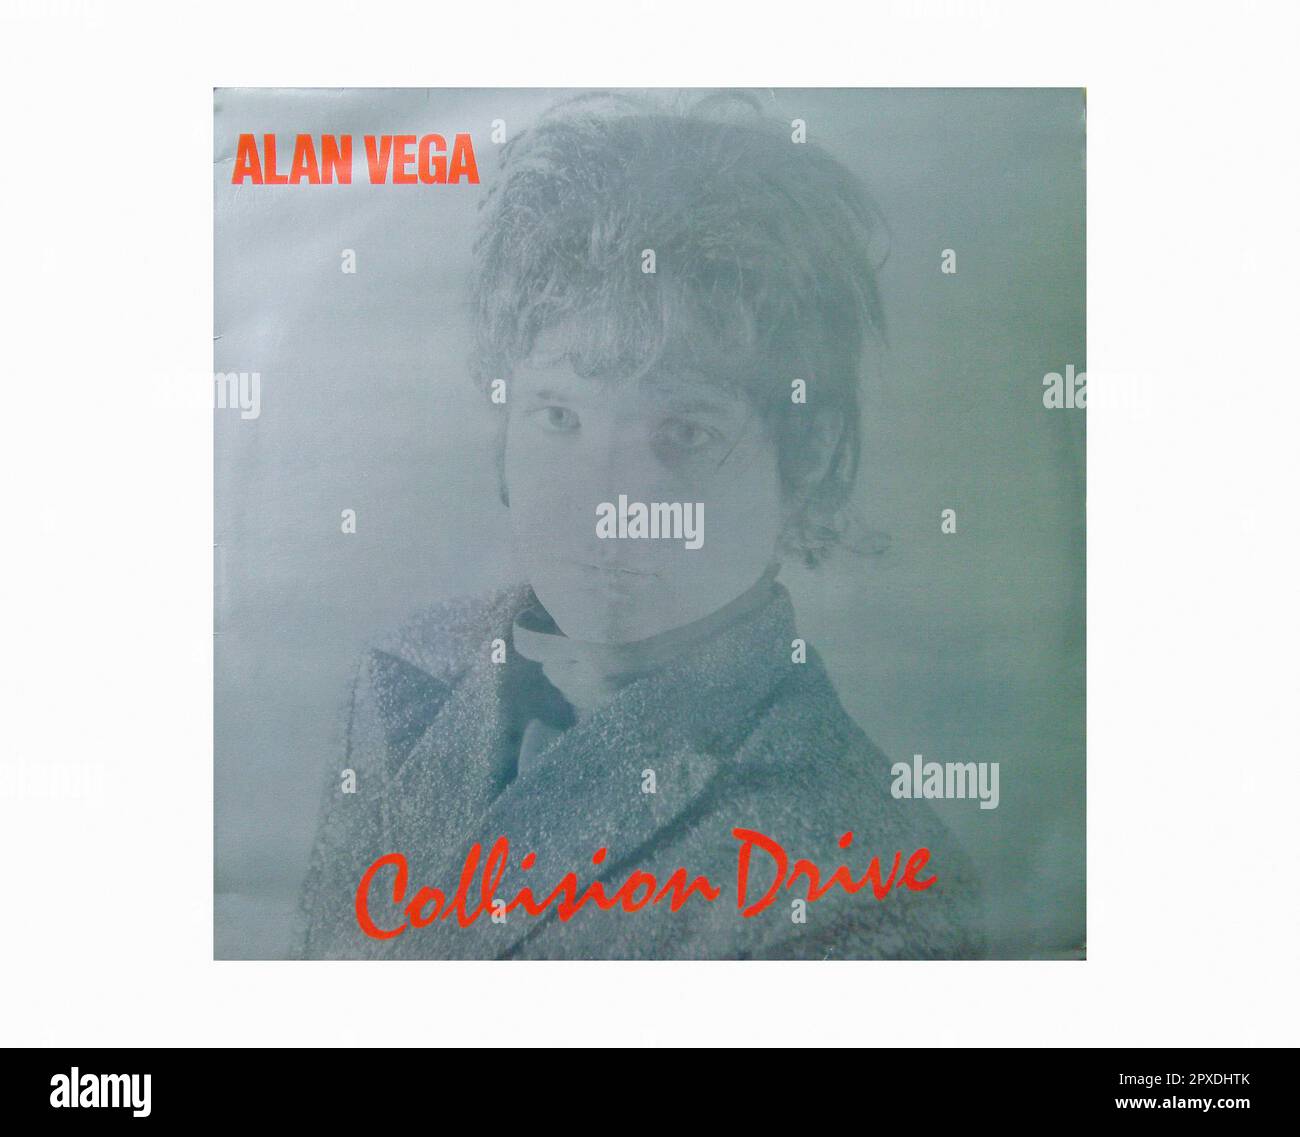 Alan Vega - collision Drive [1981] - Vintage Vinyl Record Sleeve Banque D'Images